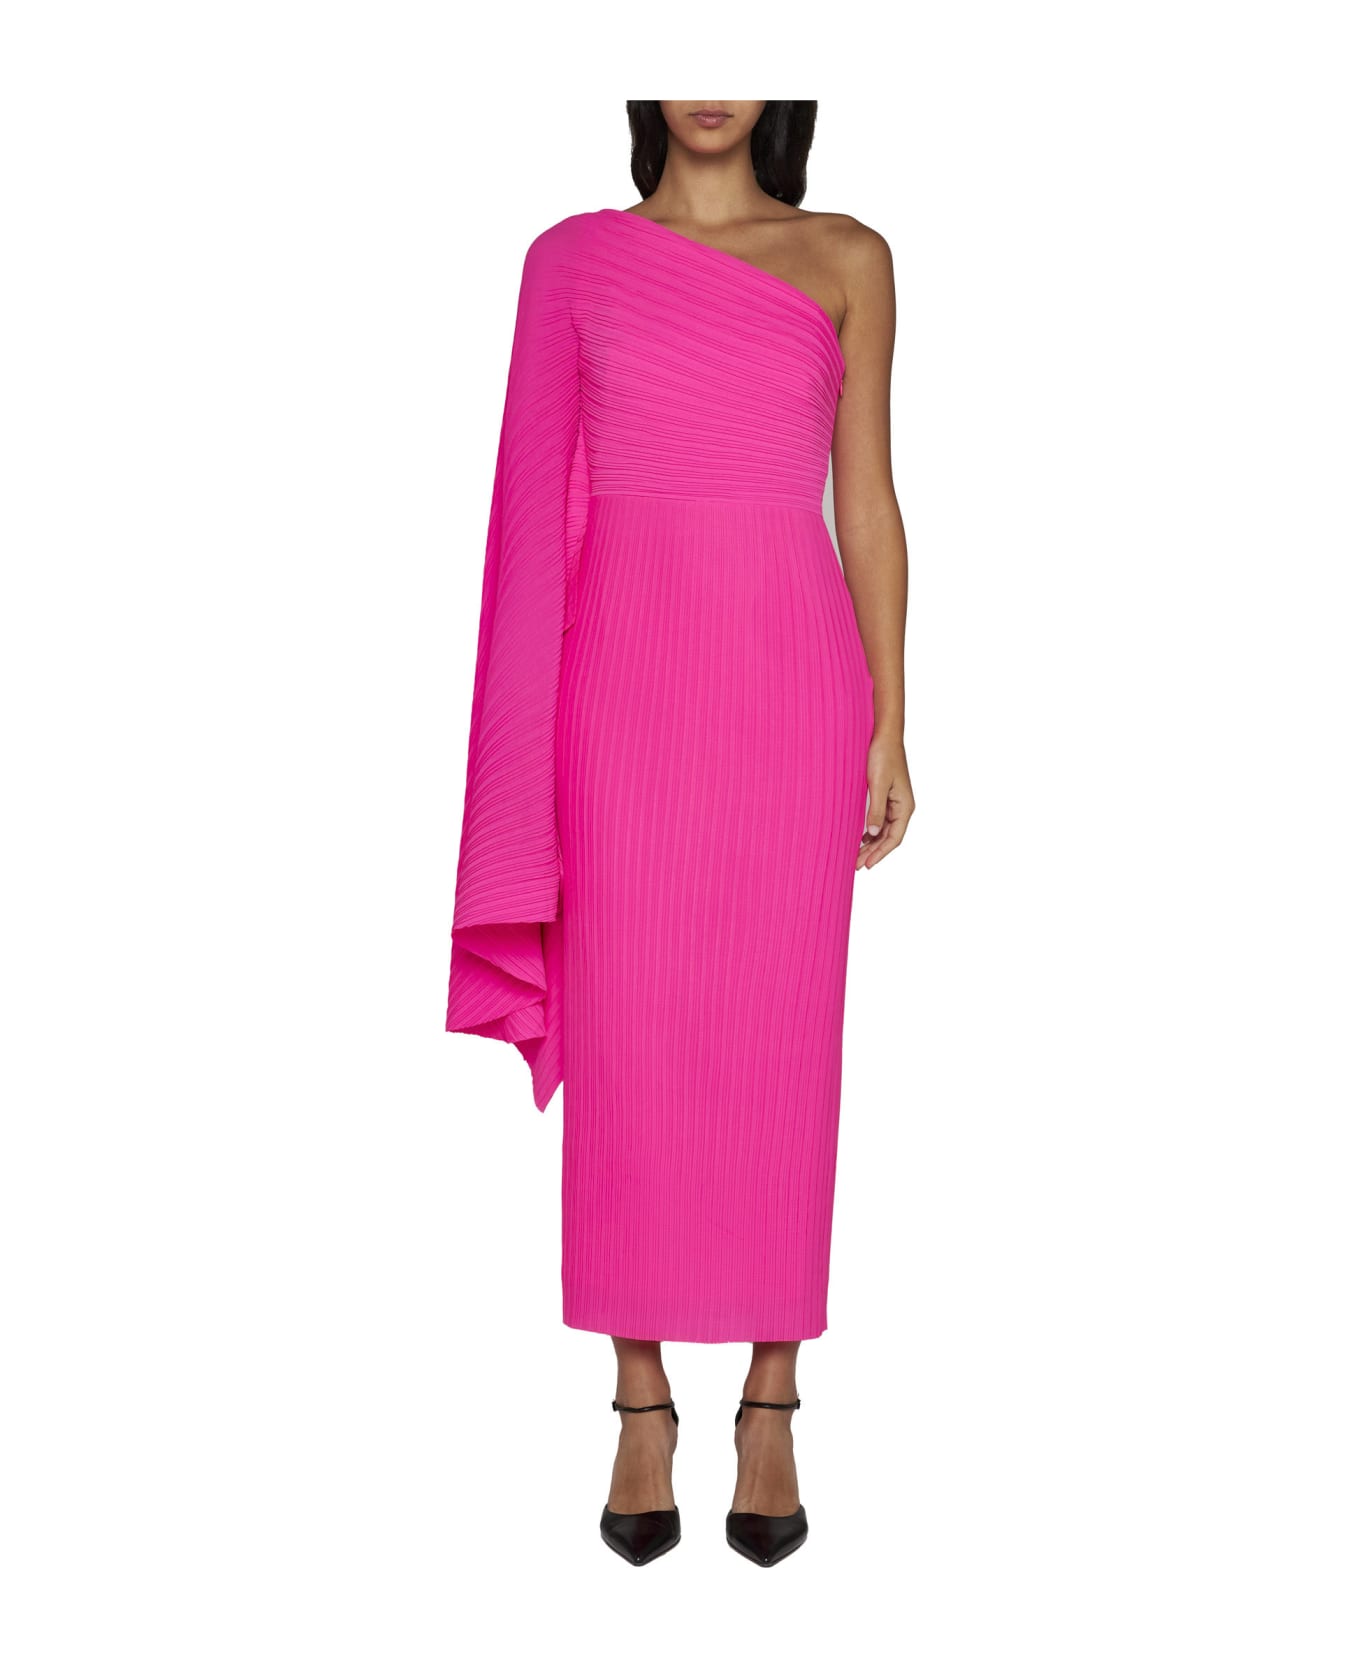 Solace London Dress - Hot pink